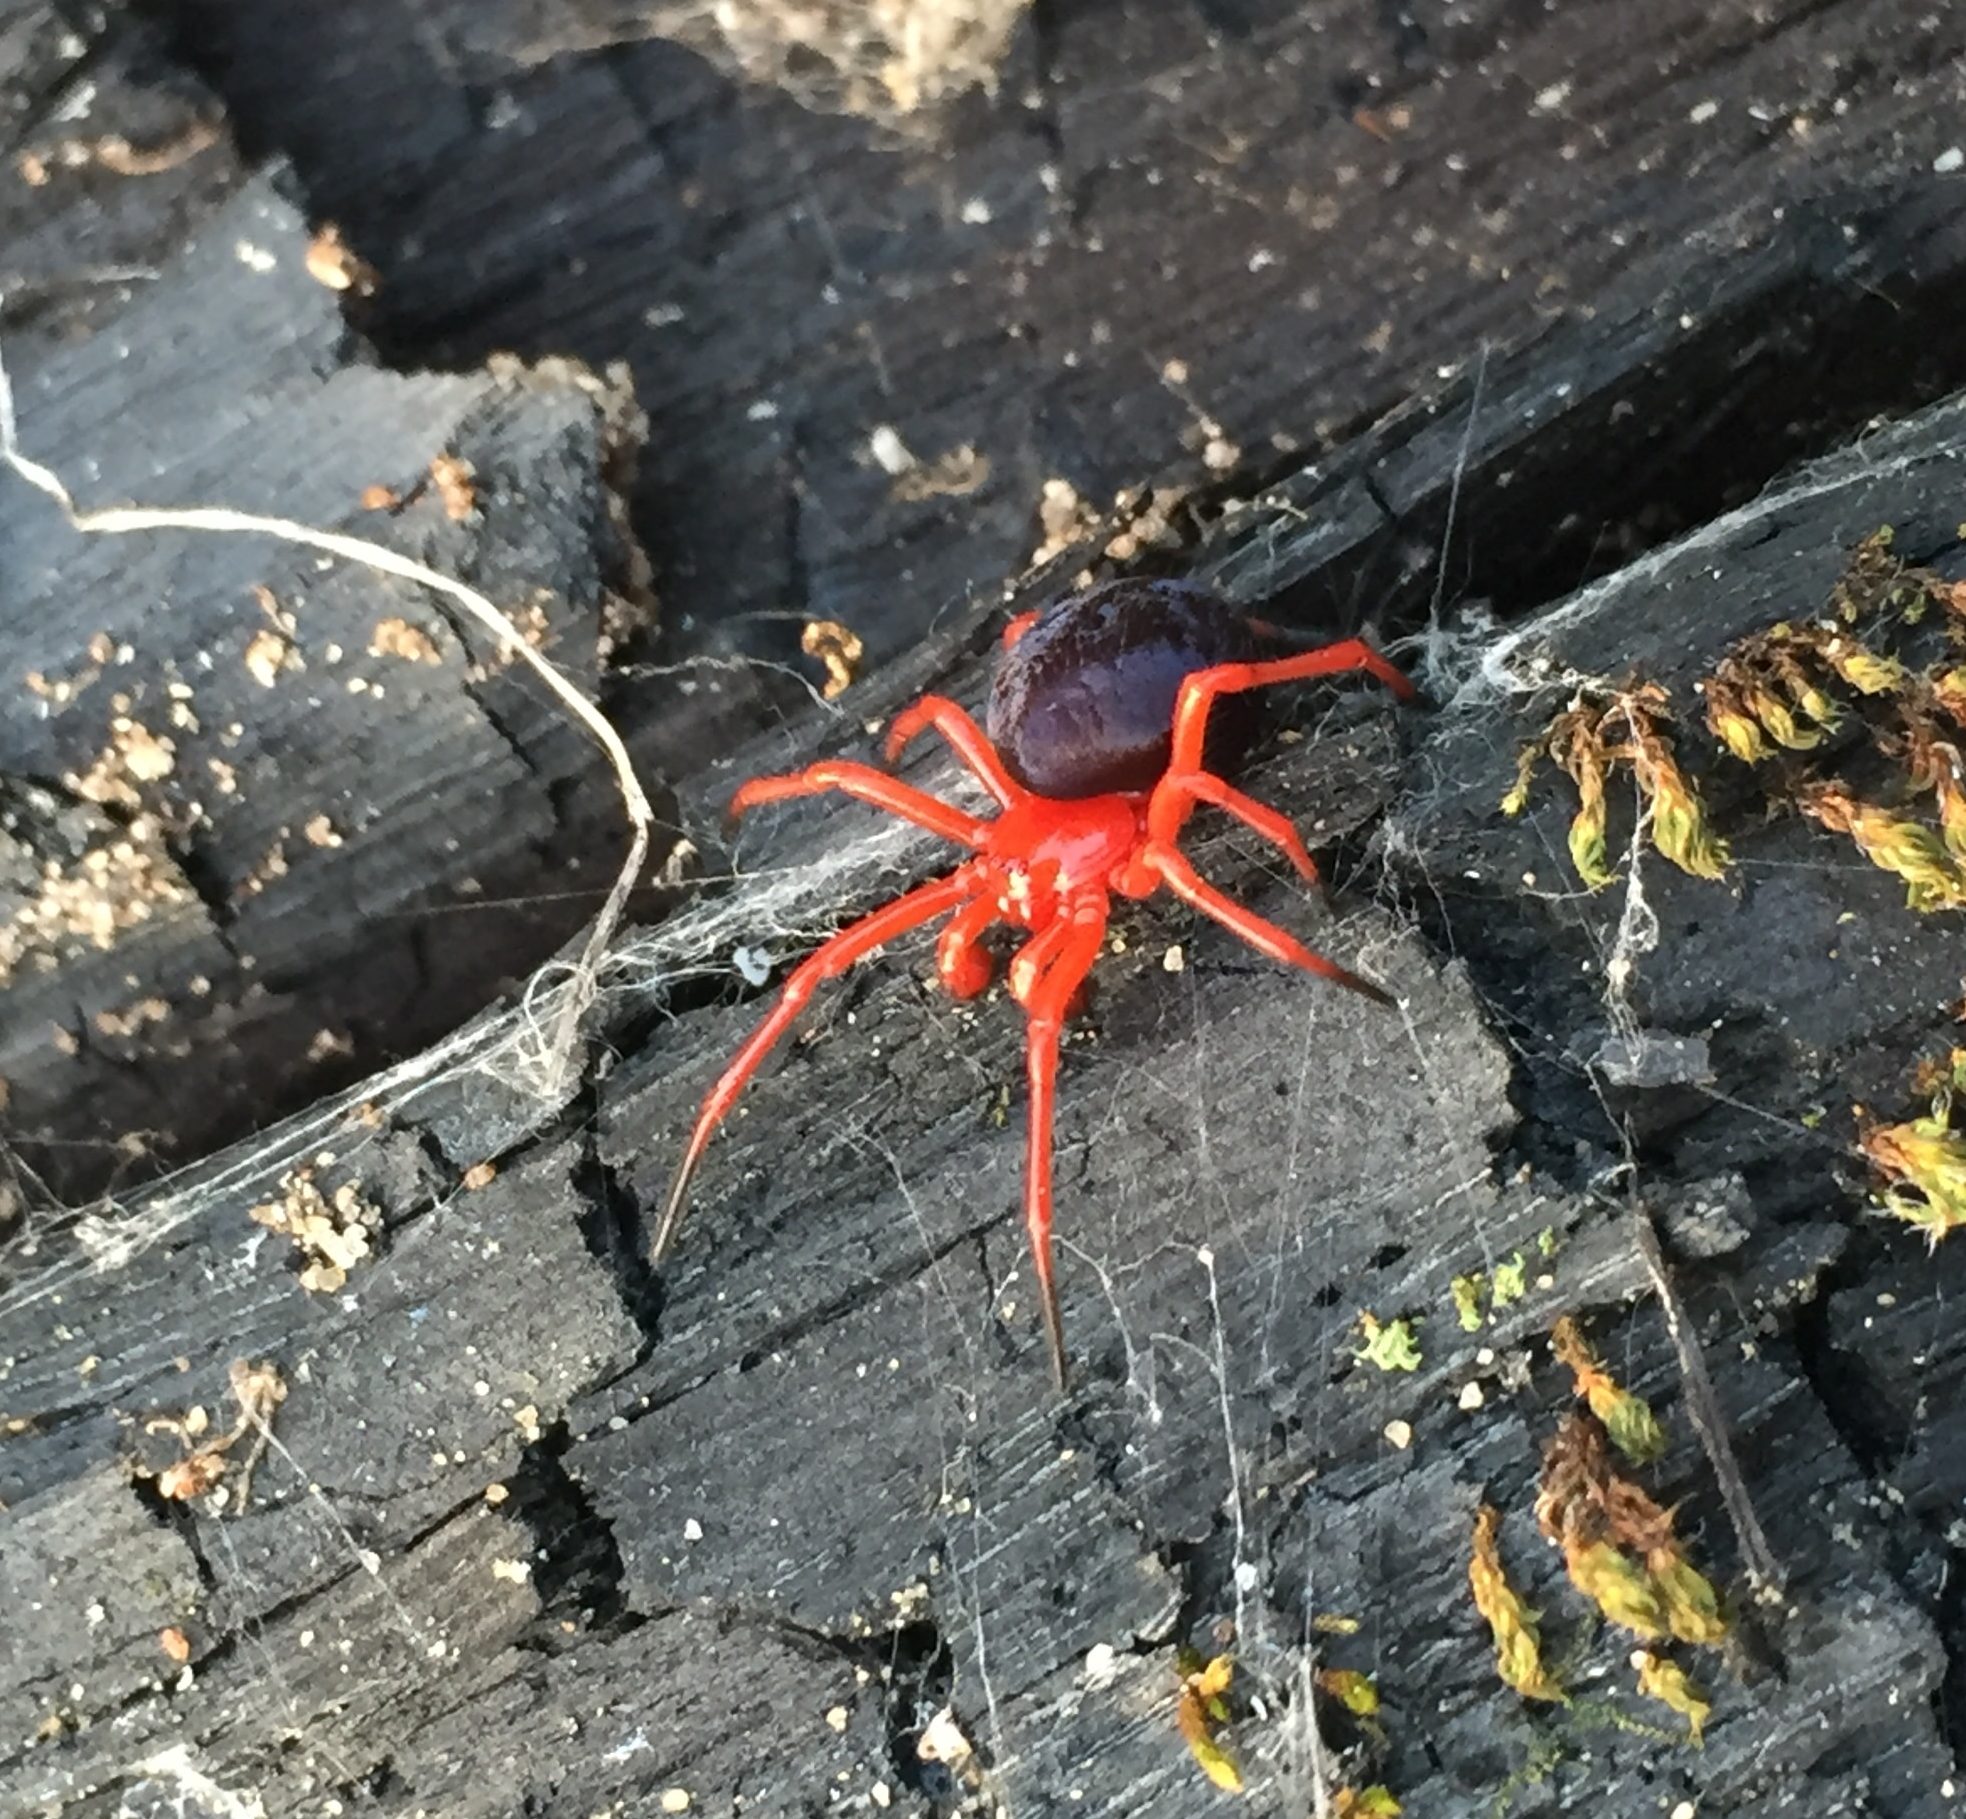 Picture of Nicodamus mainae (Main Red and Black Spider) - Male - Dorsal